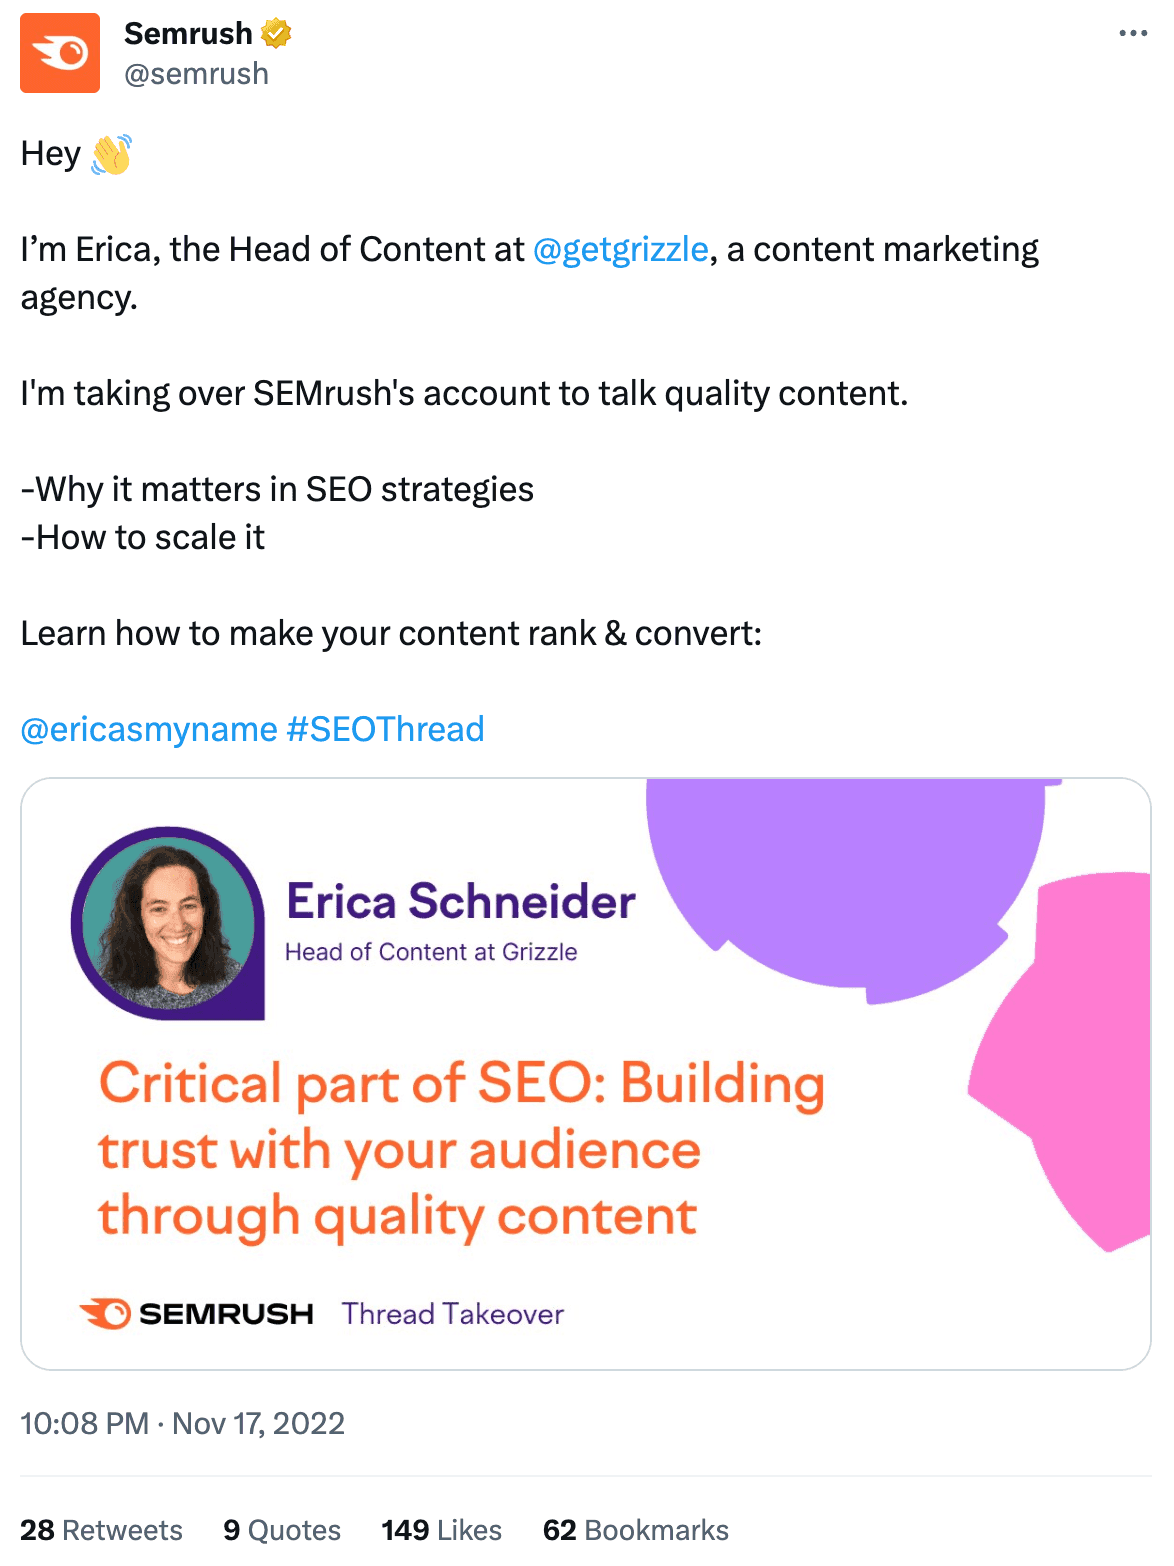 SEMrush tweet - Erica Schneider twitter takeover to talk about quality content